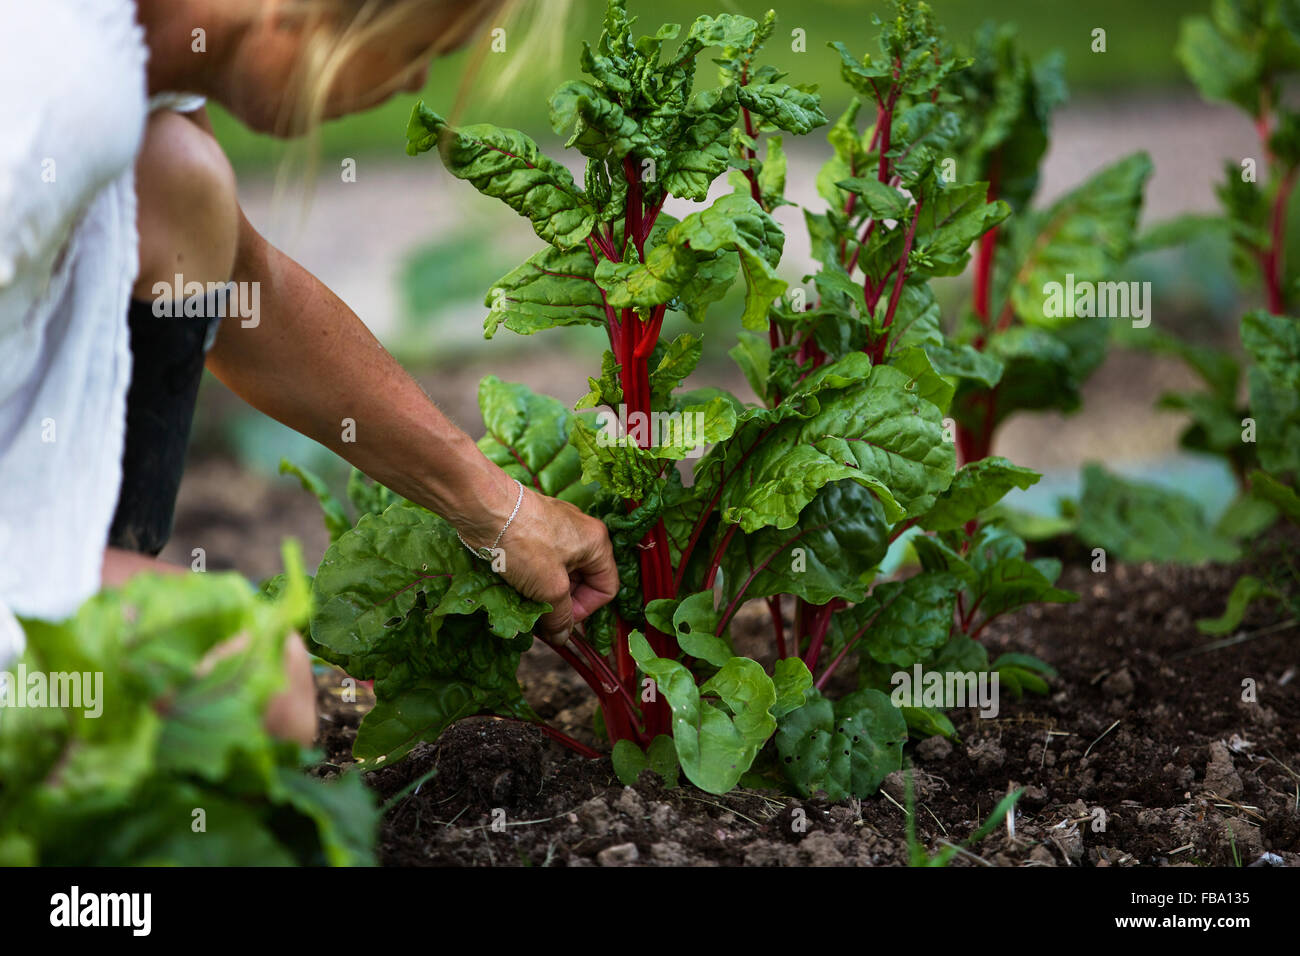 Sweden, Ostergotland, Mature woman harvesting vegetables Stock Photo